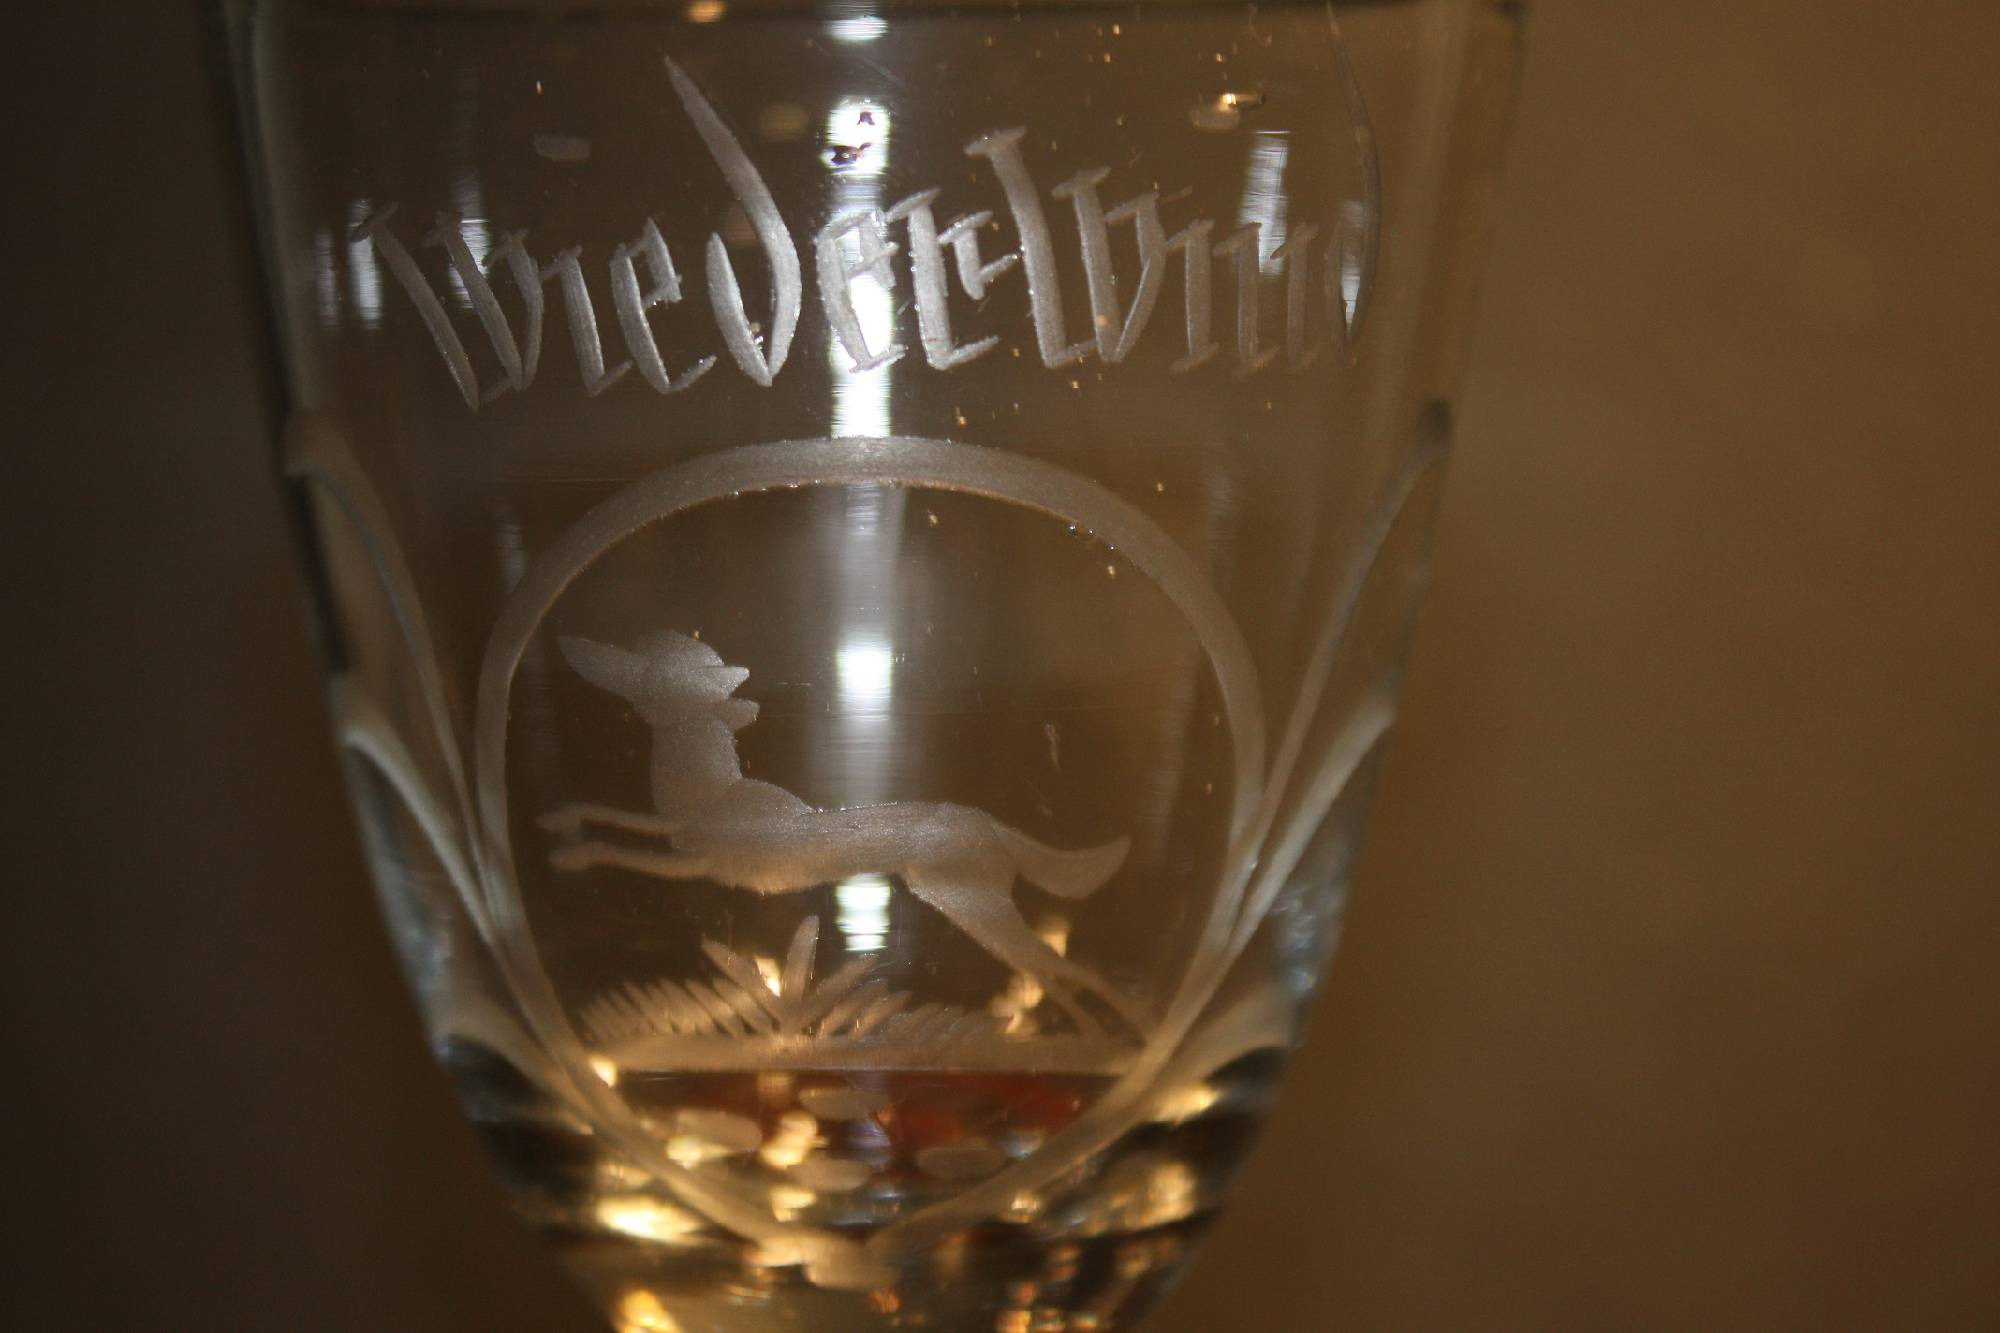 Antique 18th century 'lauenstein' engraved wine glass with inscription